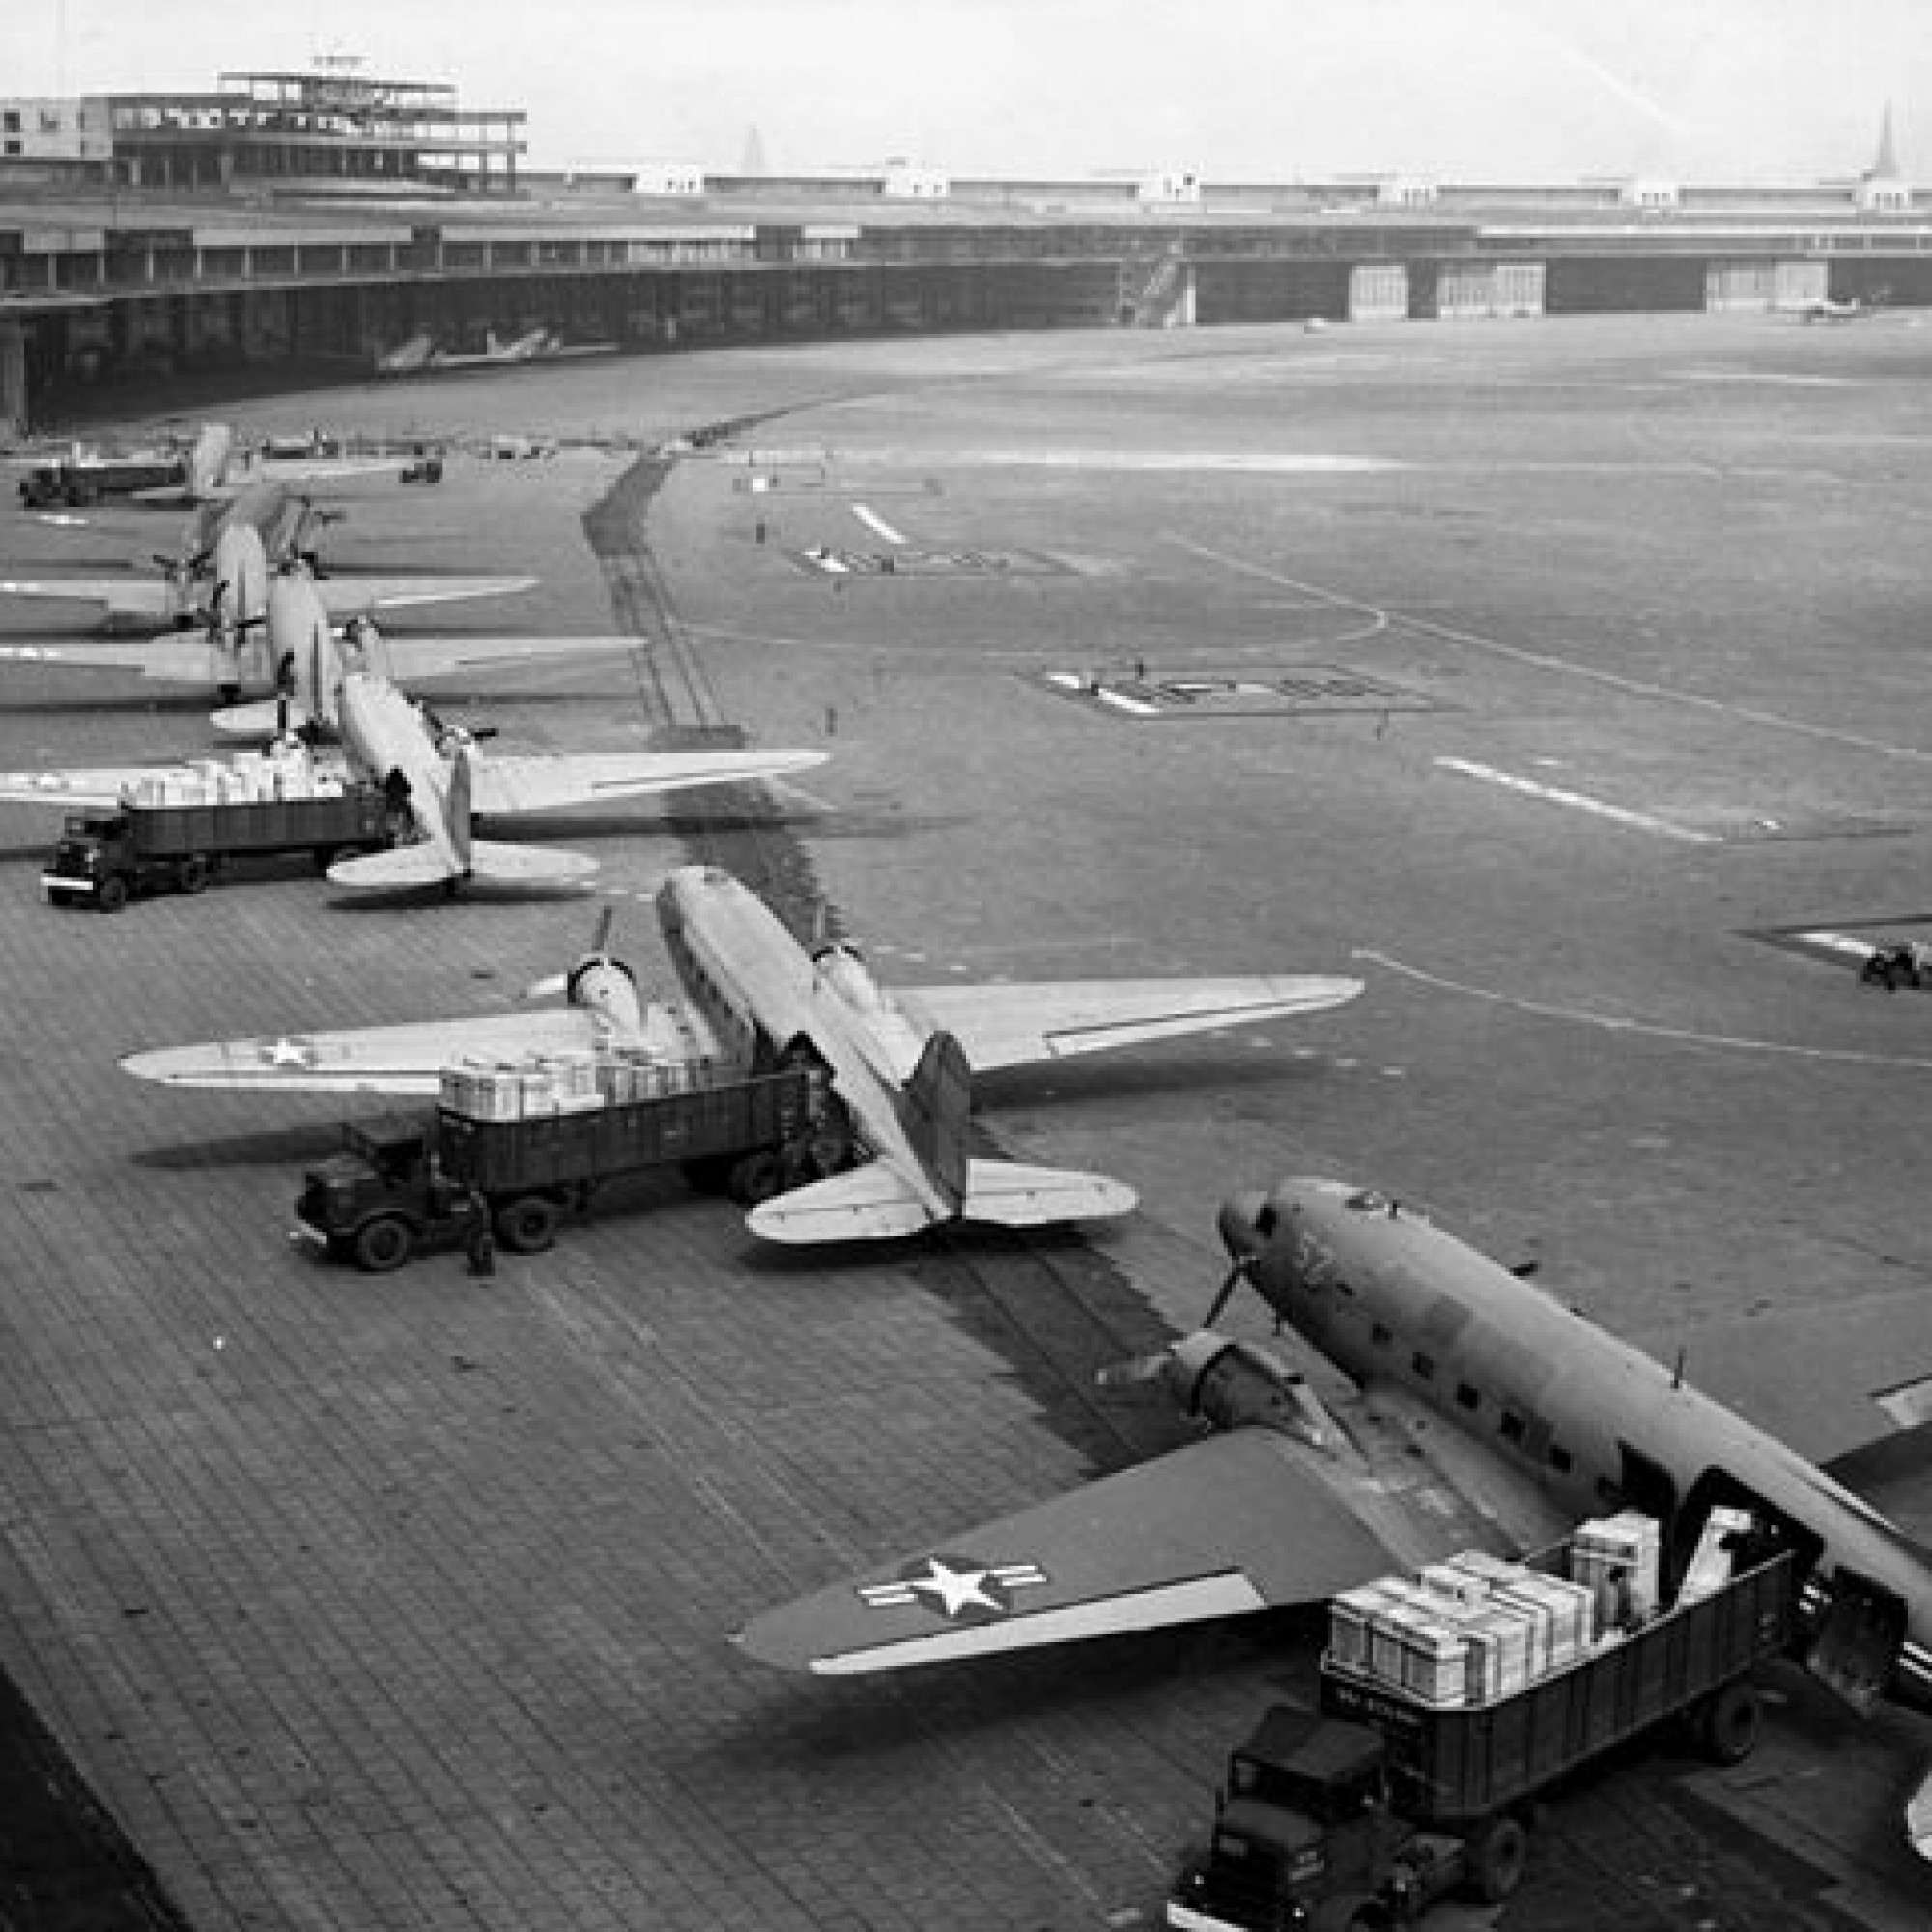 "Rosinenbomber" am Flughafen Tempelhof während der Luftbrücke, zirka 1948-49 (Bild: U.S. Air Force, public domain)